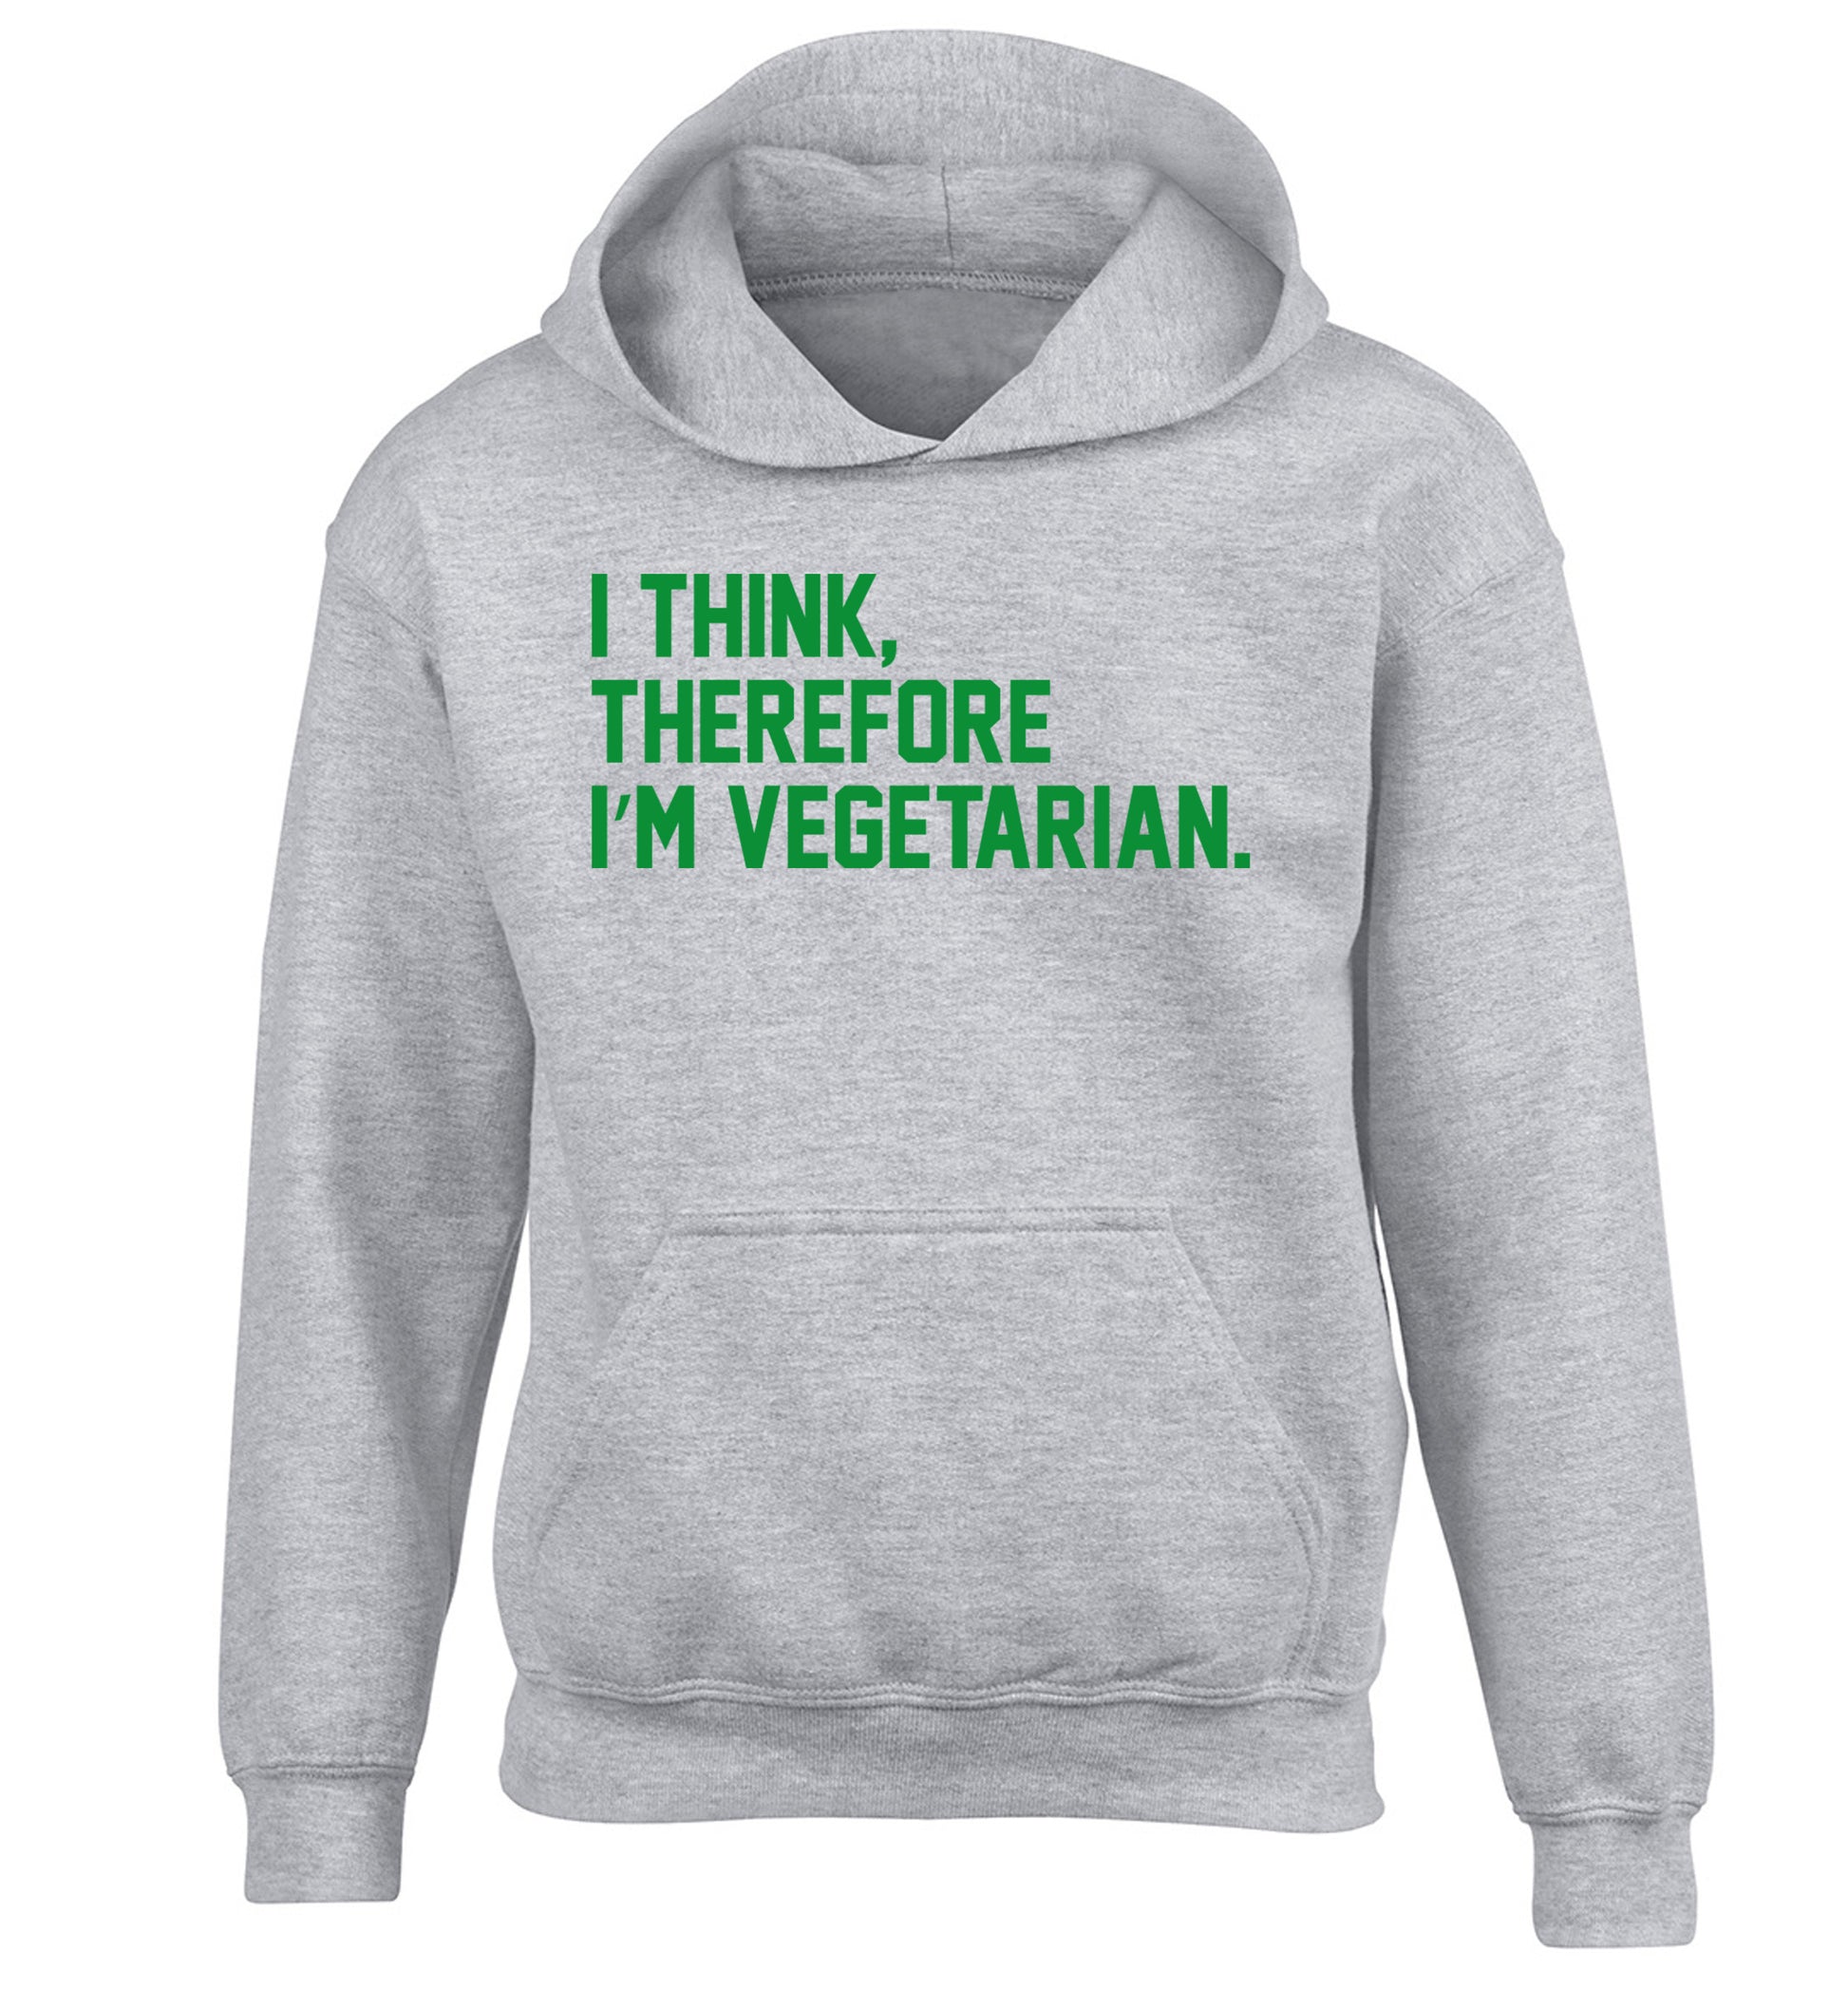 I think therefore I'm vegetarian children's grey hoodie 12-14 Years